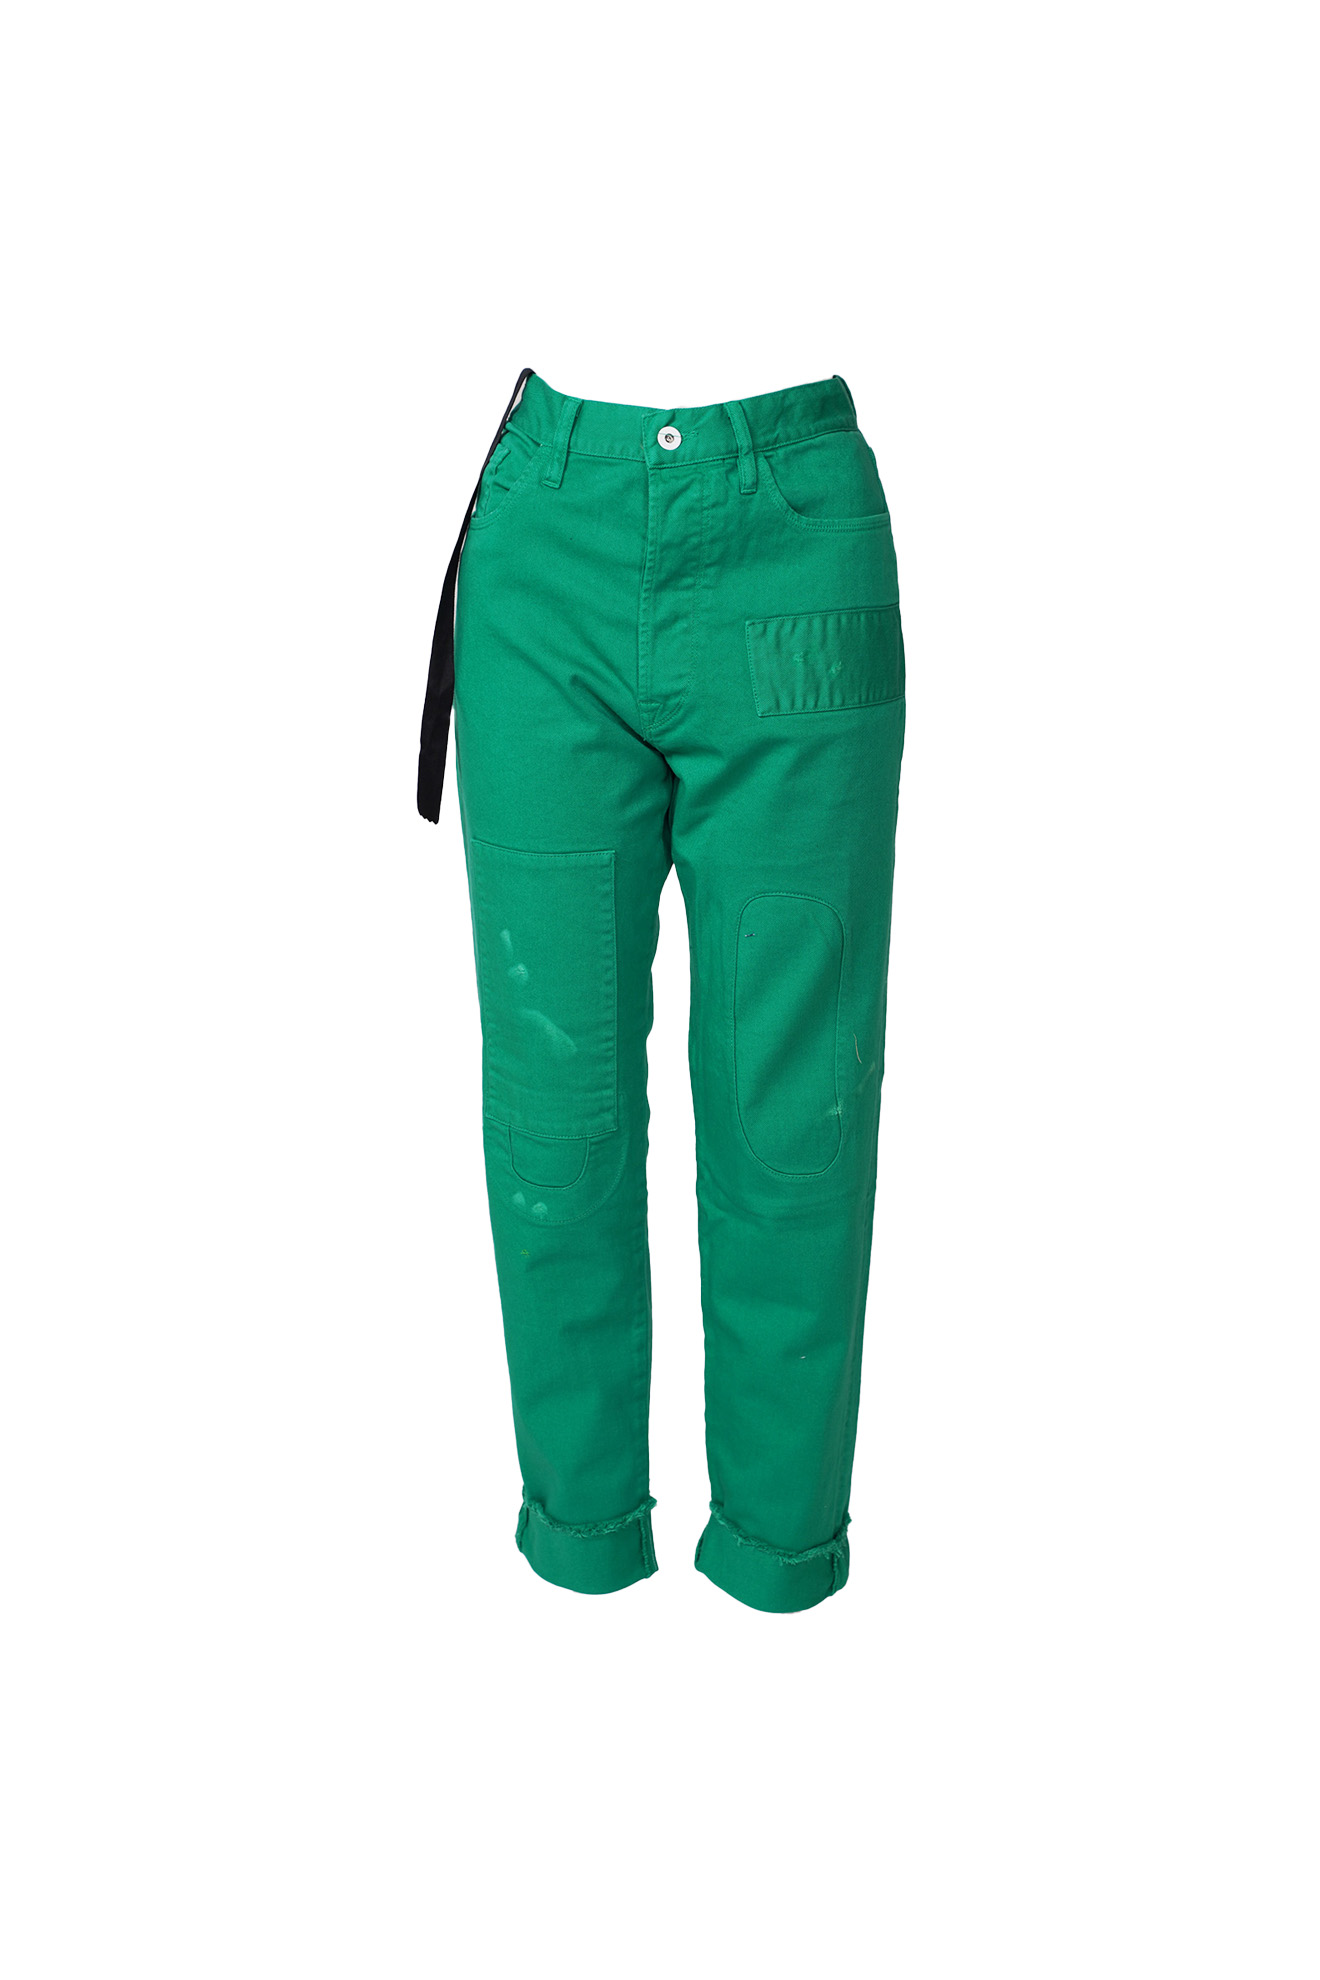 maurizio massimino Jose - Pantalon en jean avec patchs en denim vert 48